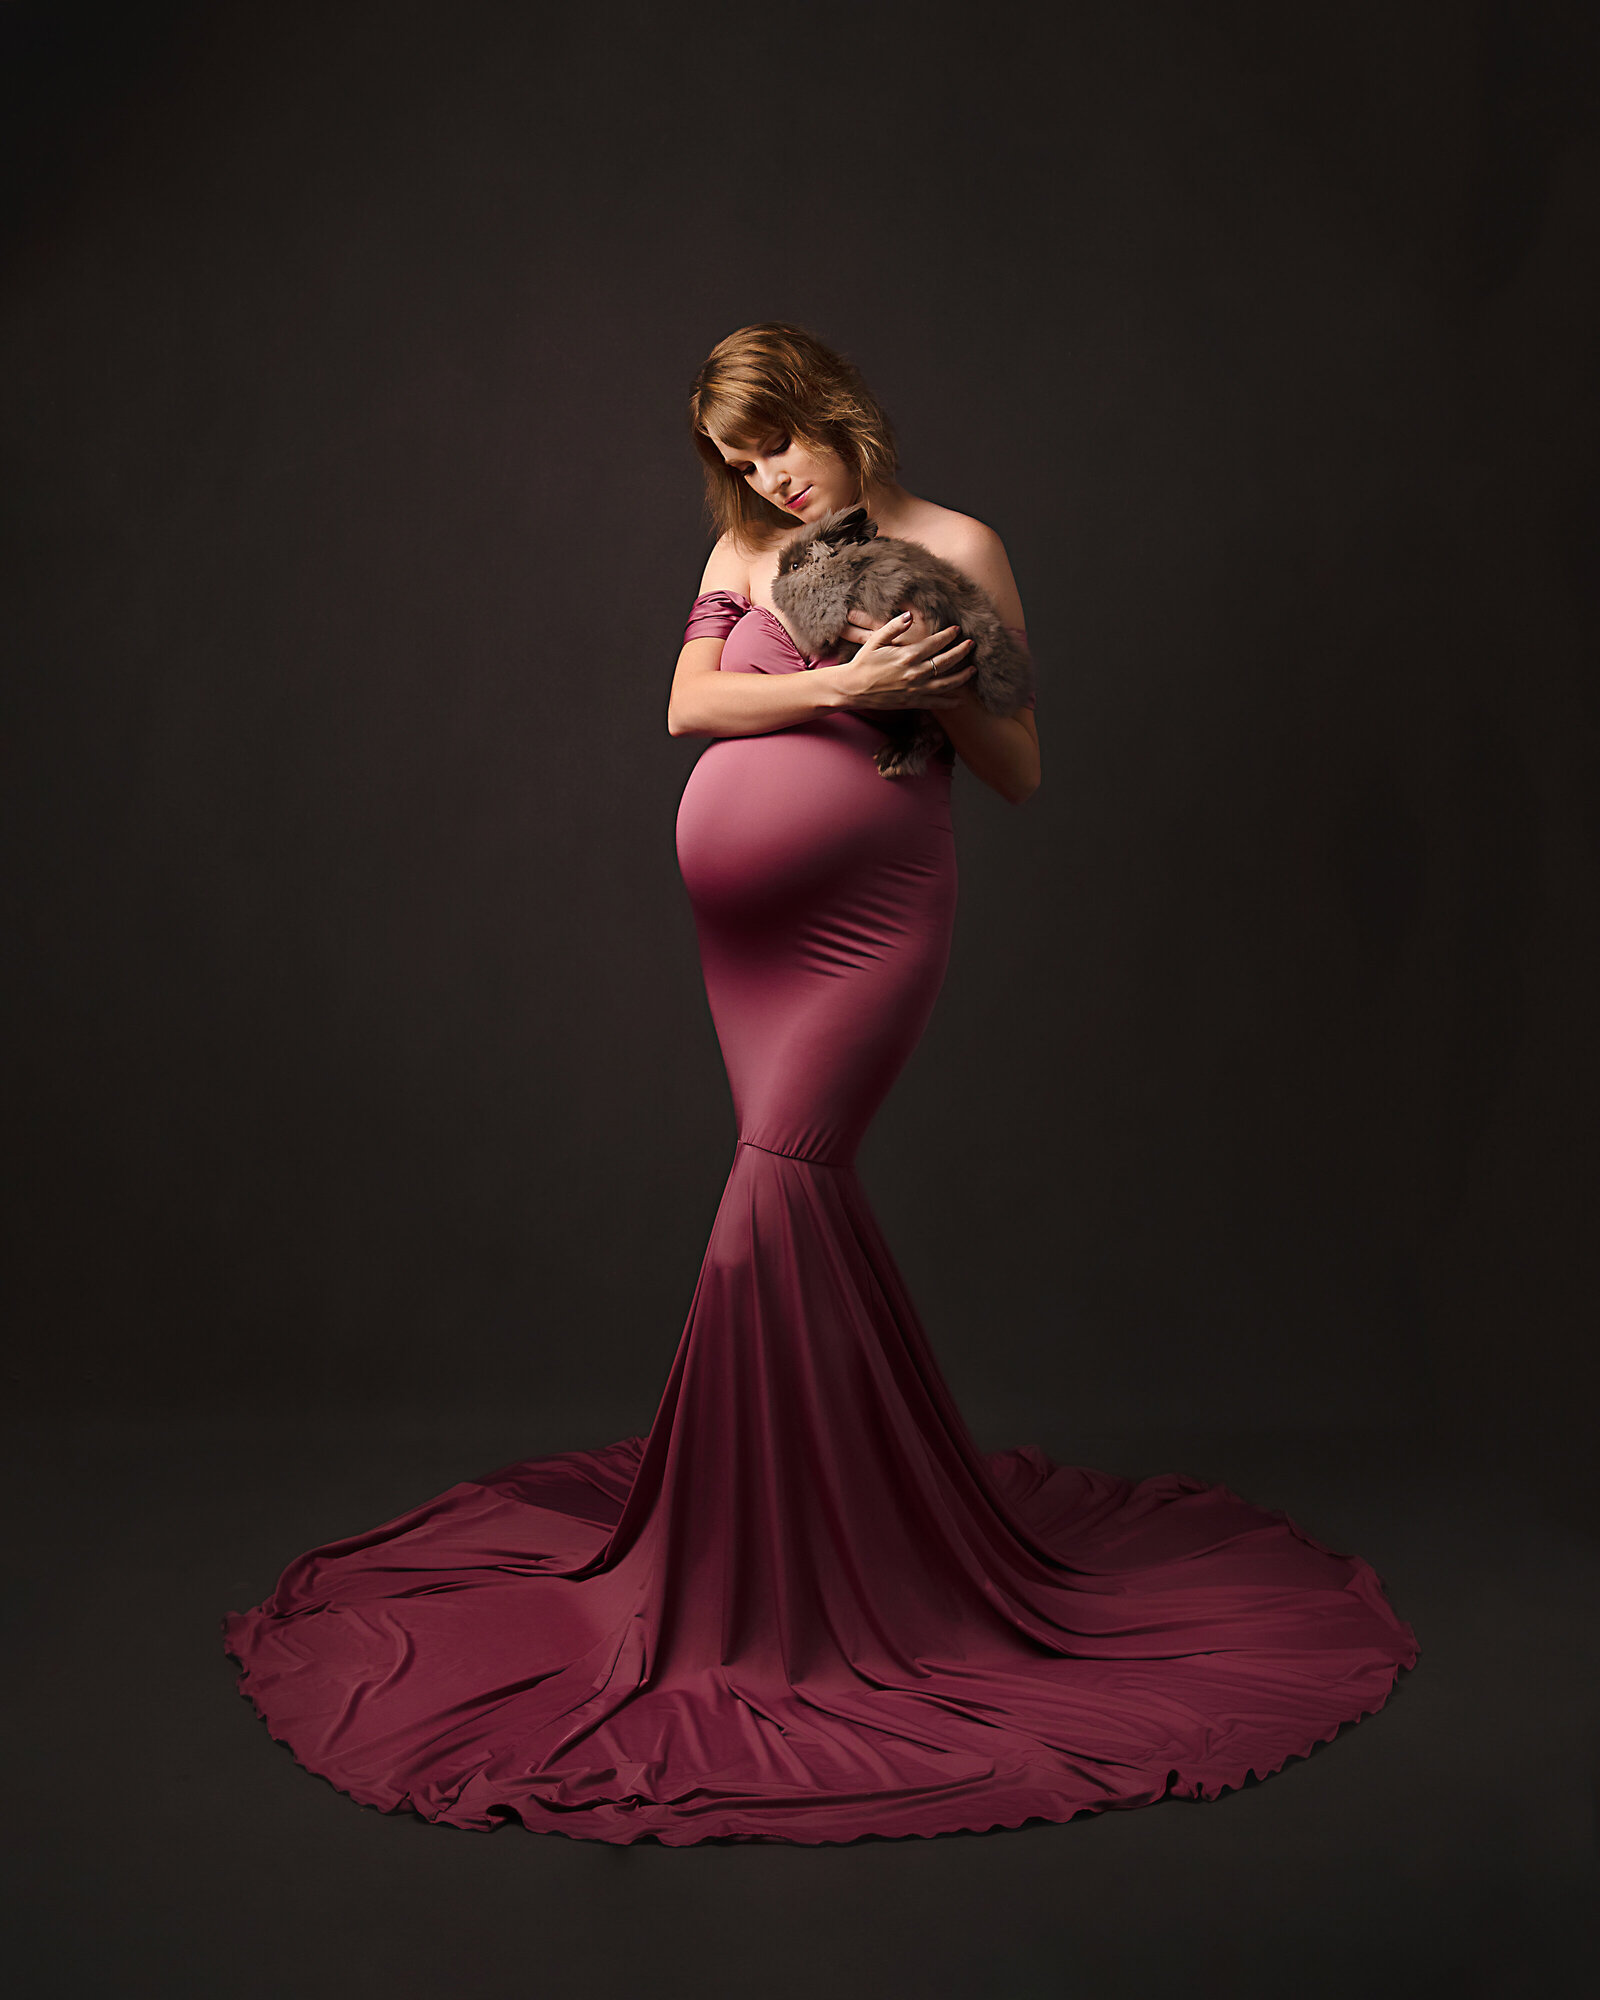 Frisco-tx-maternity-photoshoot-session